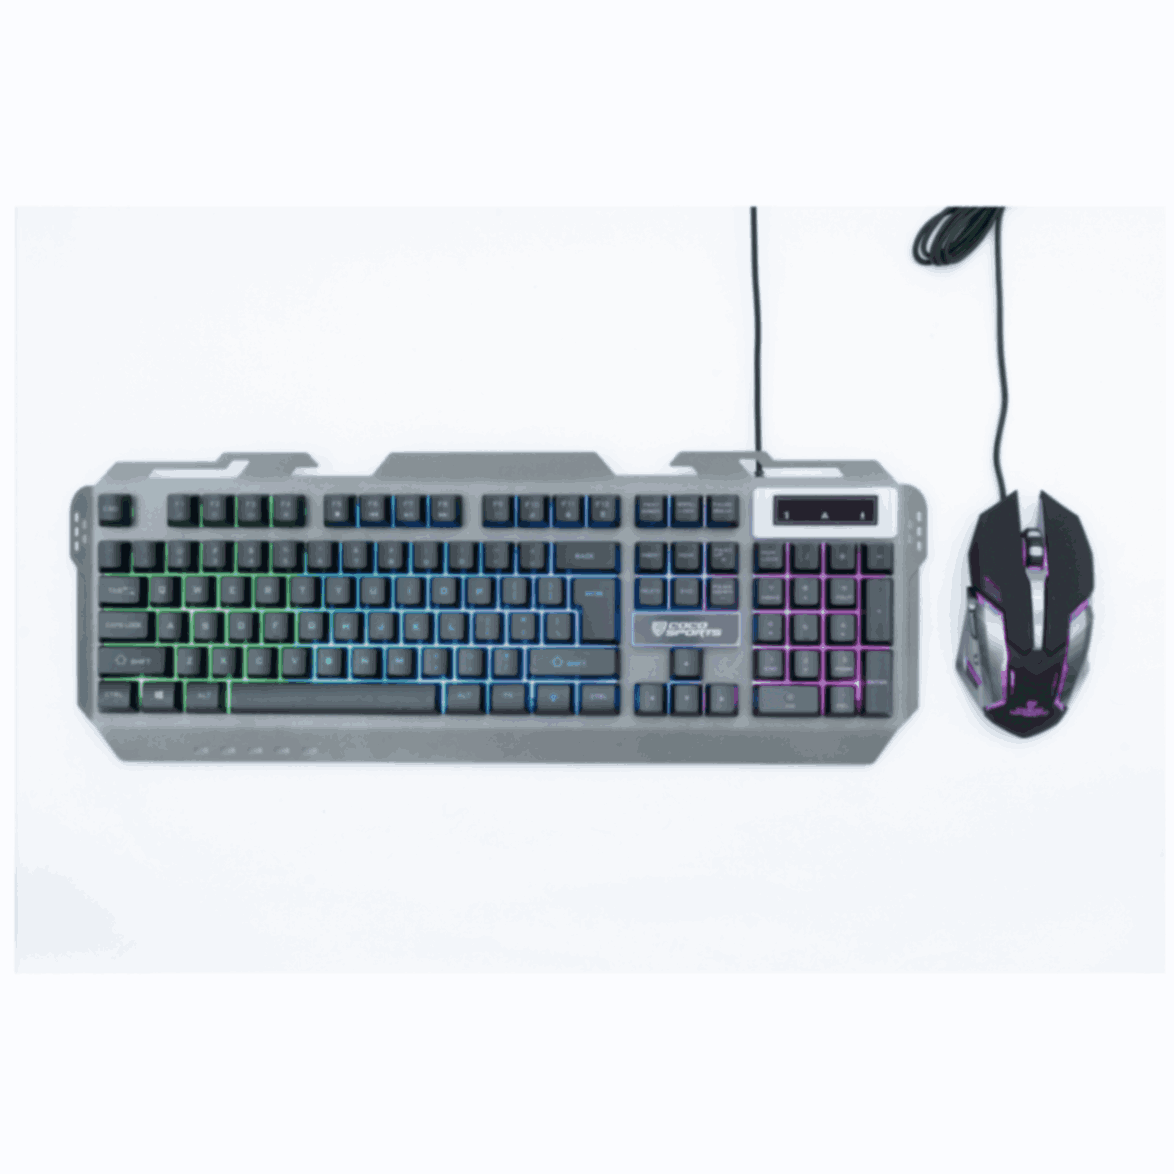 Krater Gaming Wired Keyboard Mouse Combo,104 Keys, Rainbow Backlighting, 19 Anti-Ghosting Keys